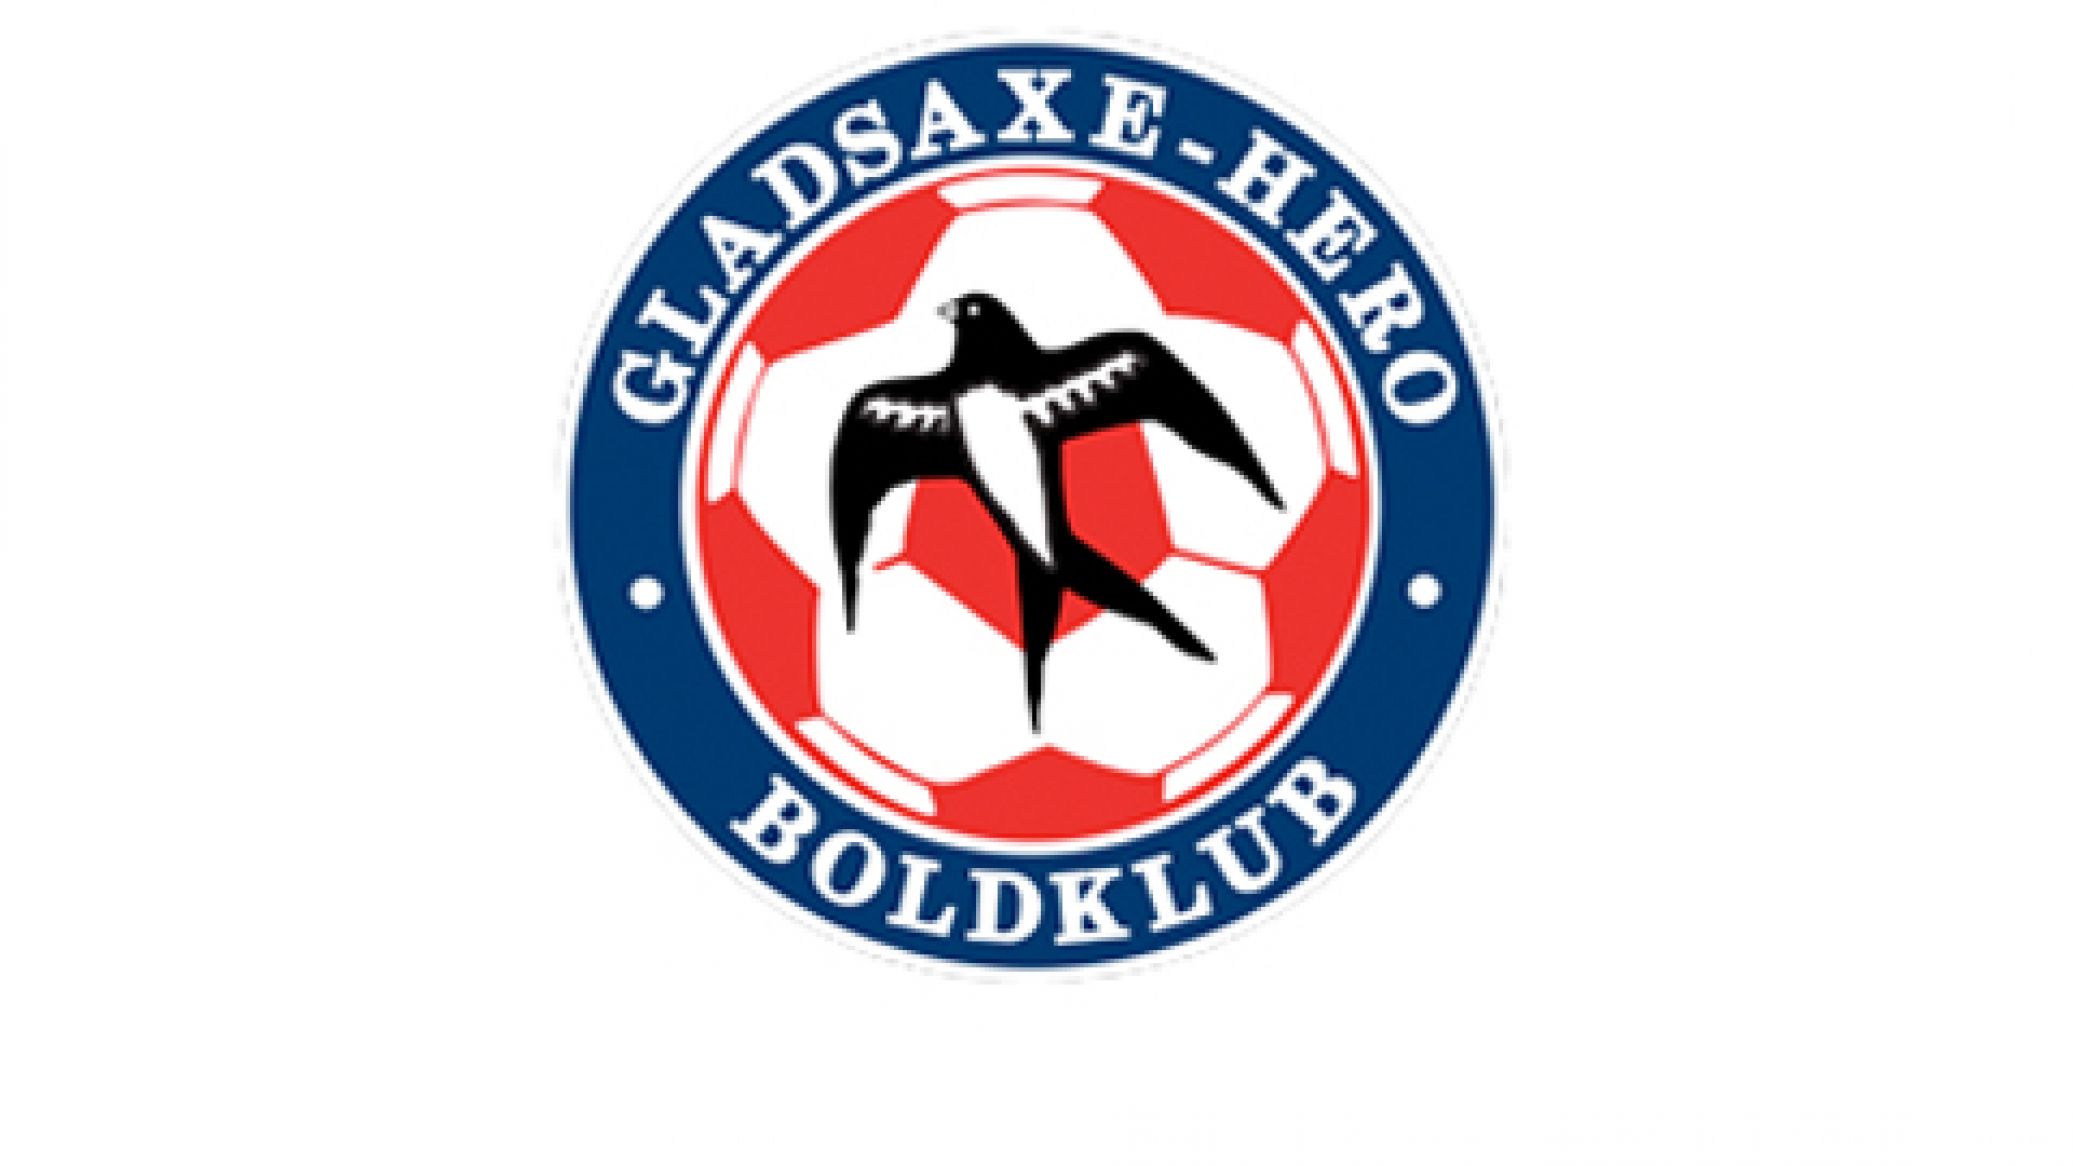 Gladsexe-Hero Boldklub